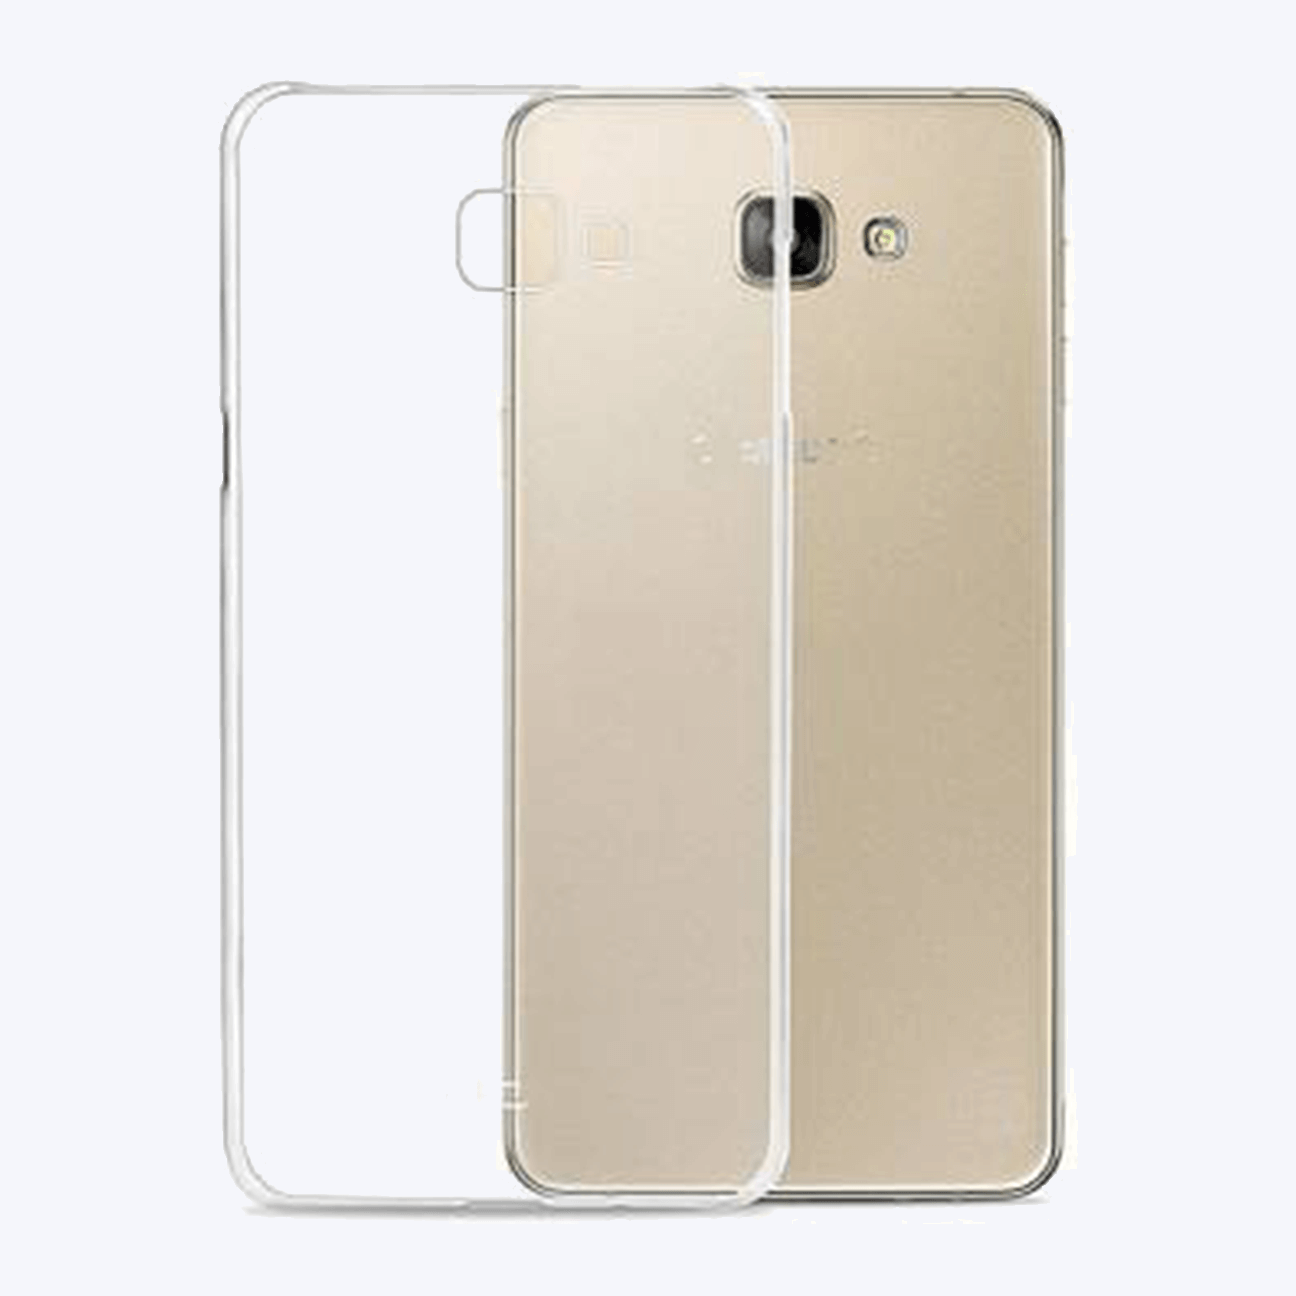 Samsung Galaxy A7 (2017) Transparent Back Cover